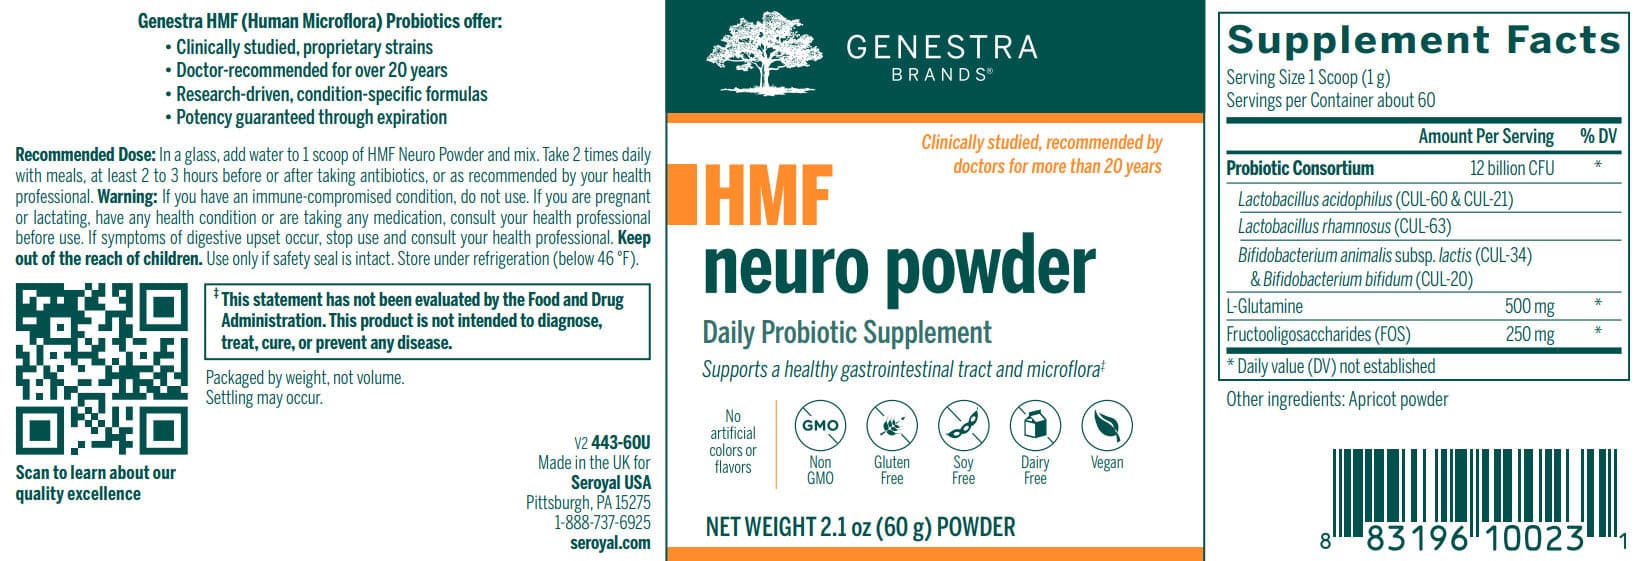 Genestra Brands HMF Neuro Powder Label